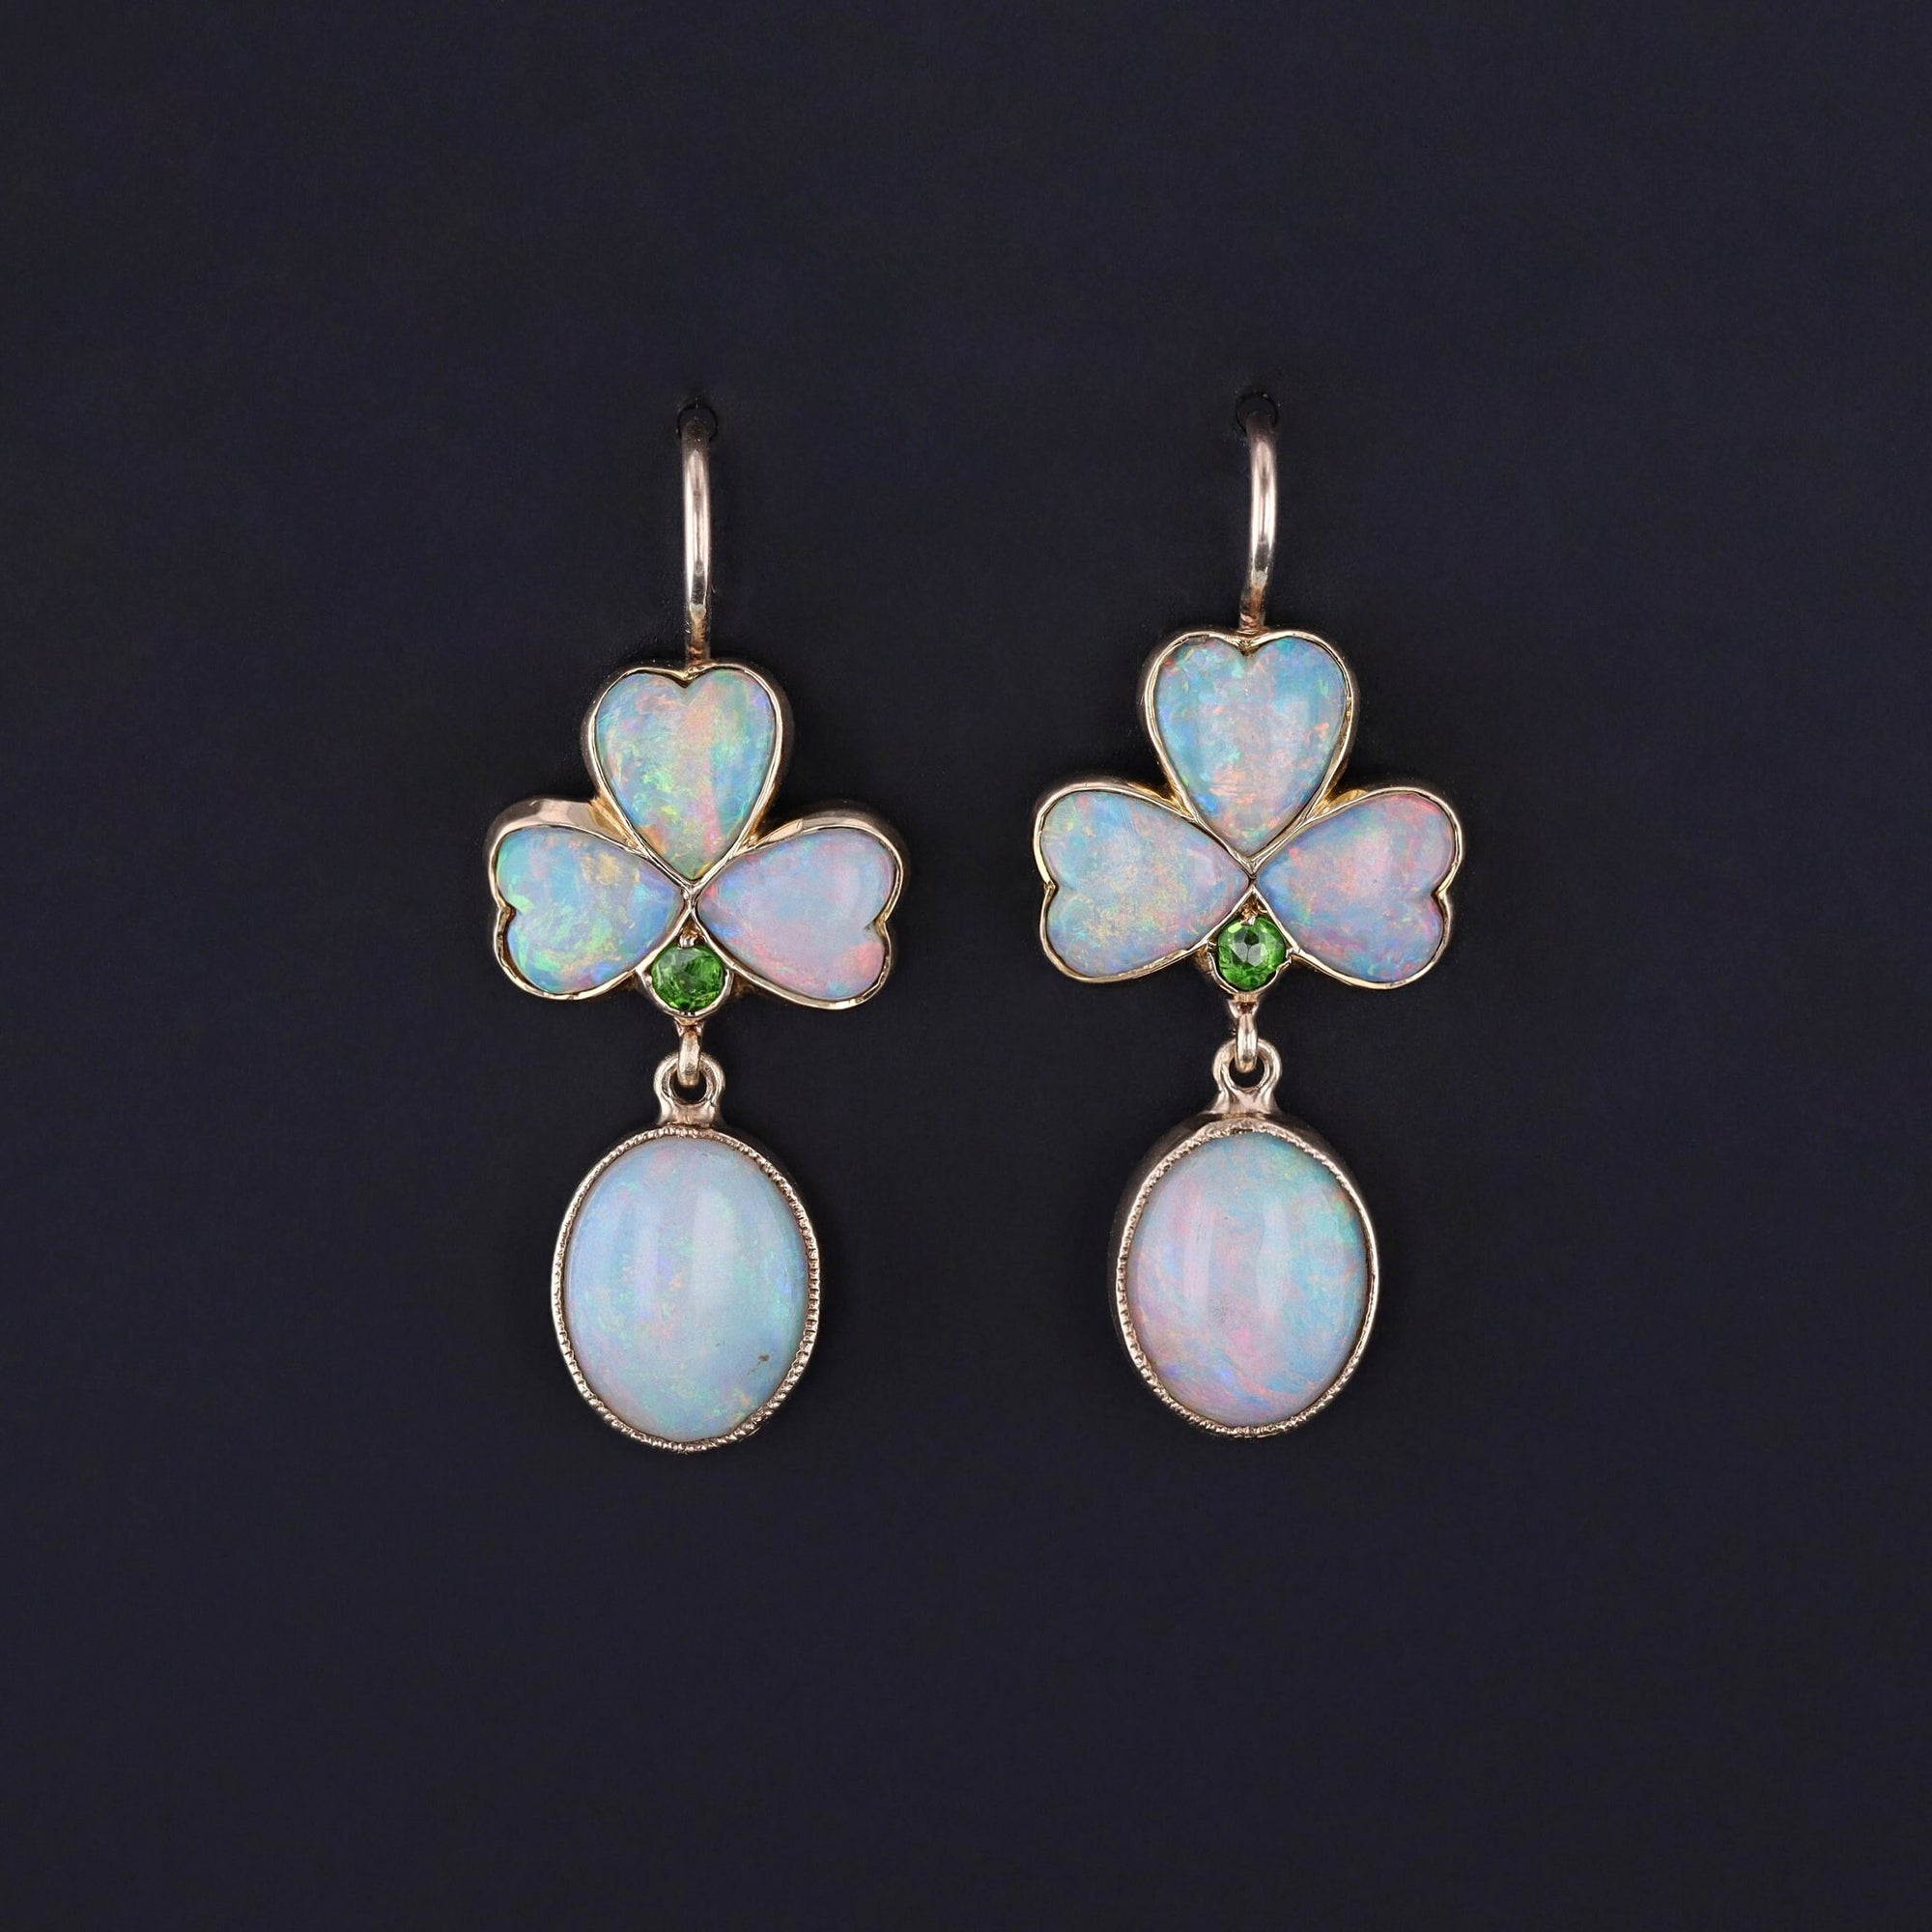 Antique Opal and Demantoid Garnet Conversion Earrings